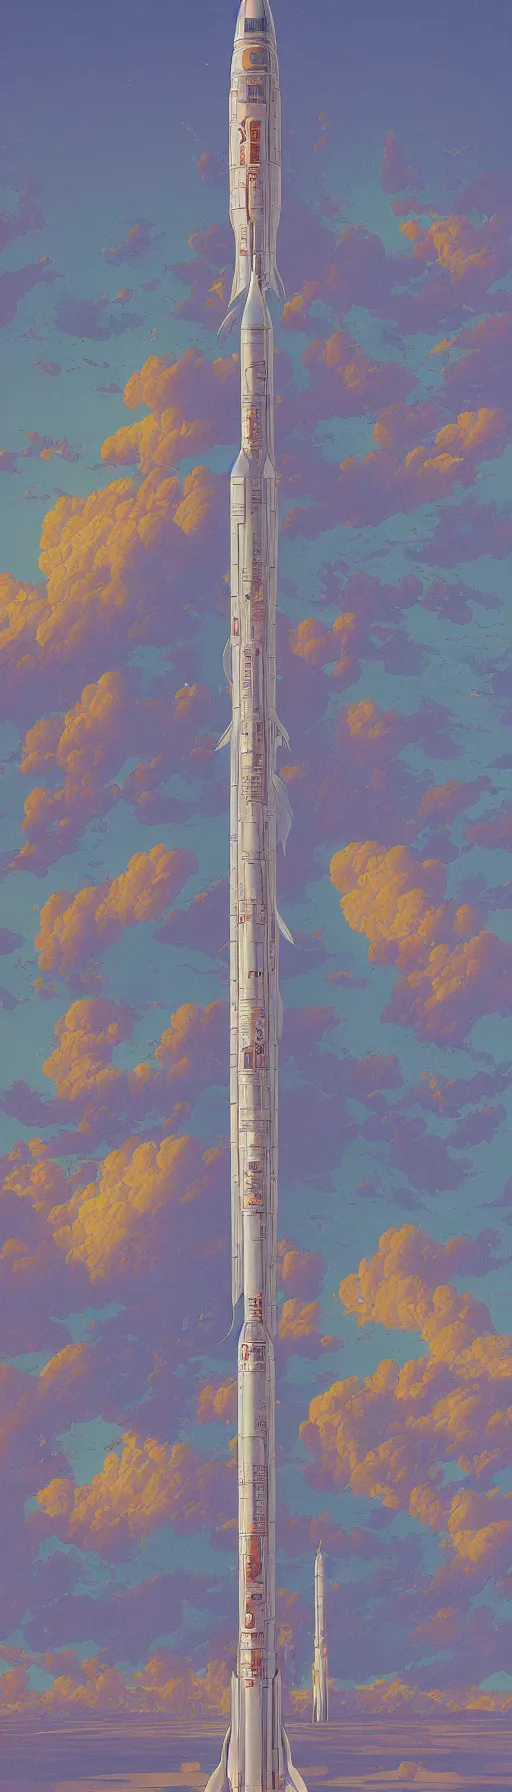 Prompt: an original jean giraud and beeple digital art masterpiece of a giant rocket